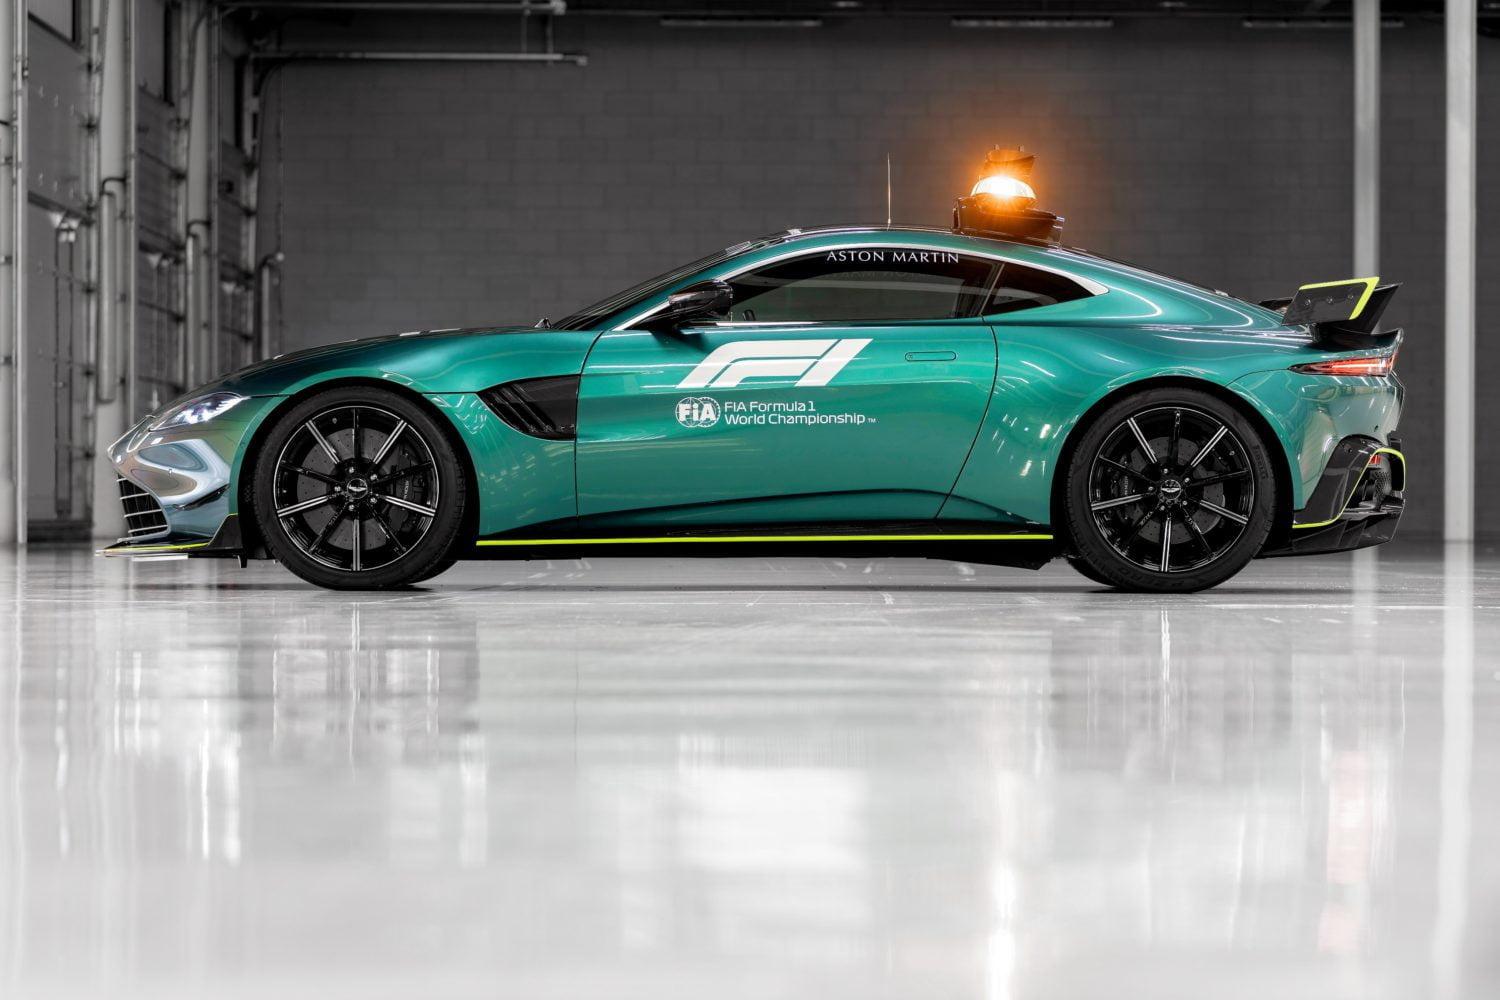 De Aston Martin Vantage F1 safety car